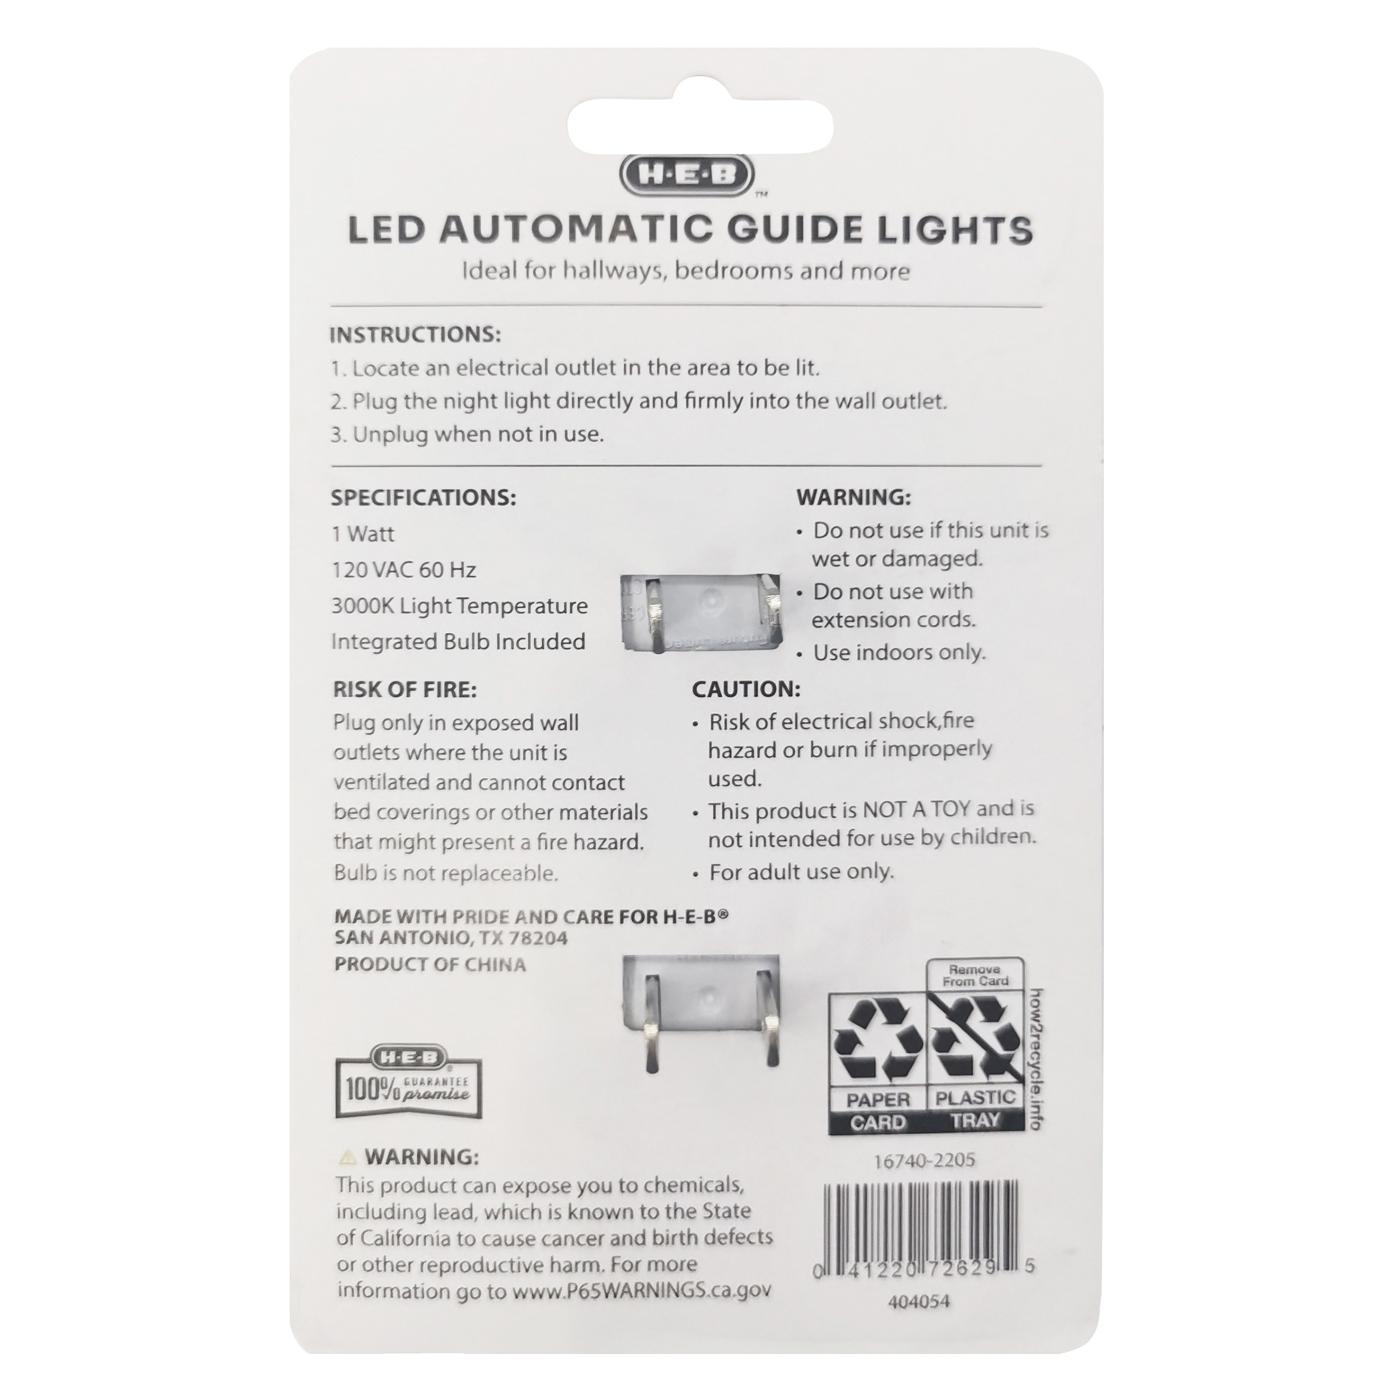 H-E-B LED Automatic Guide Lights; image 3 of 3